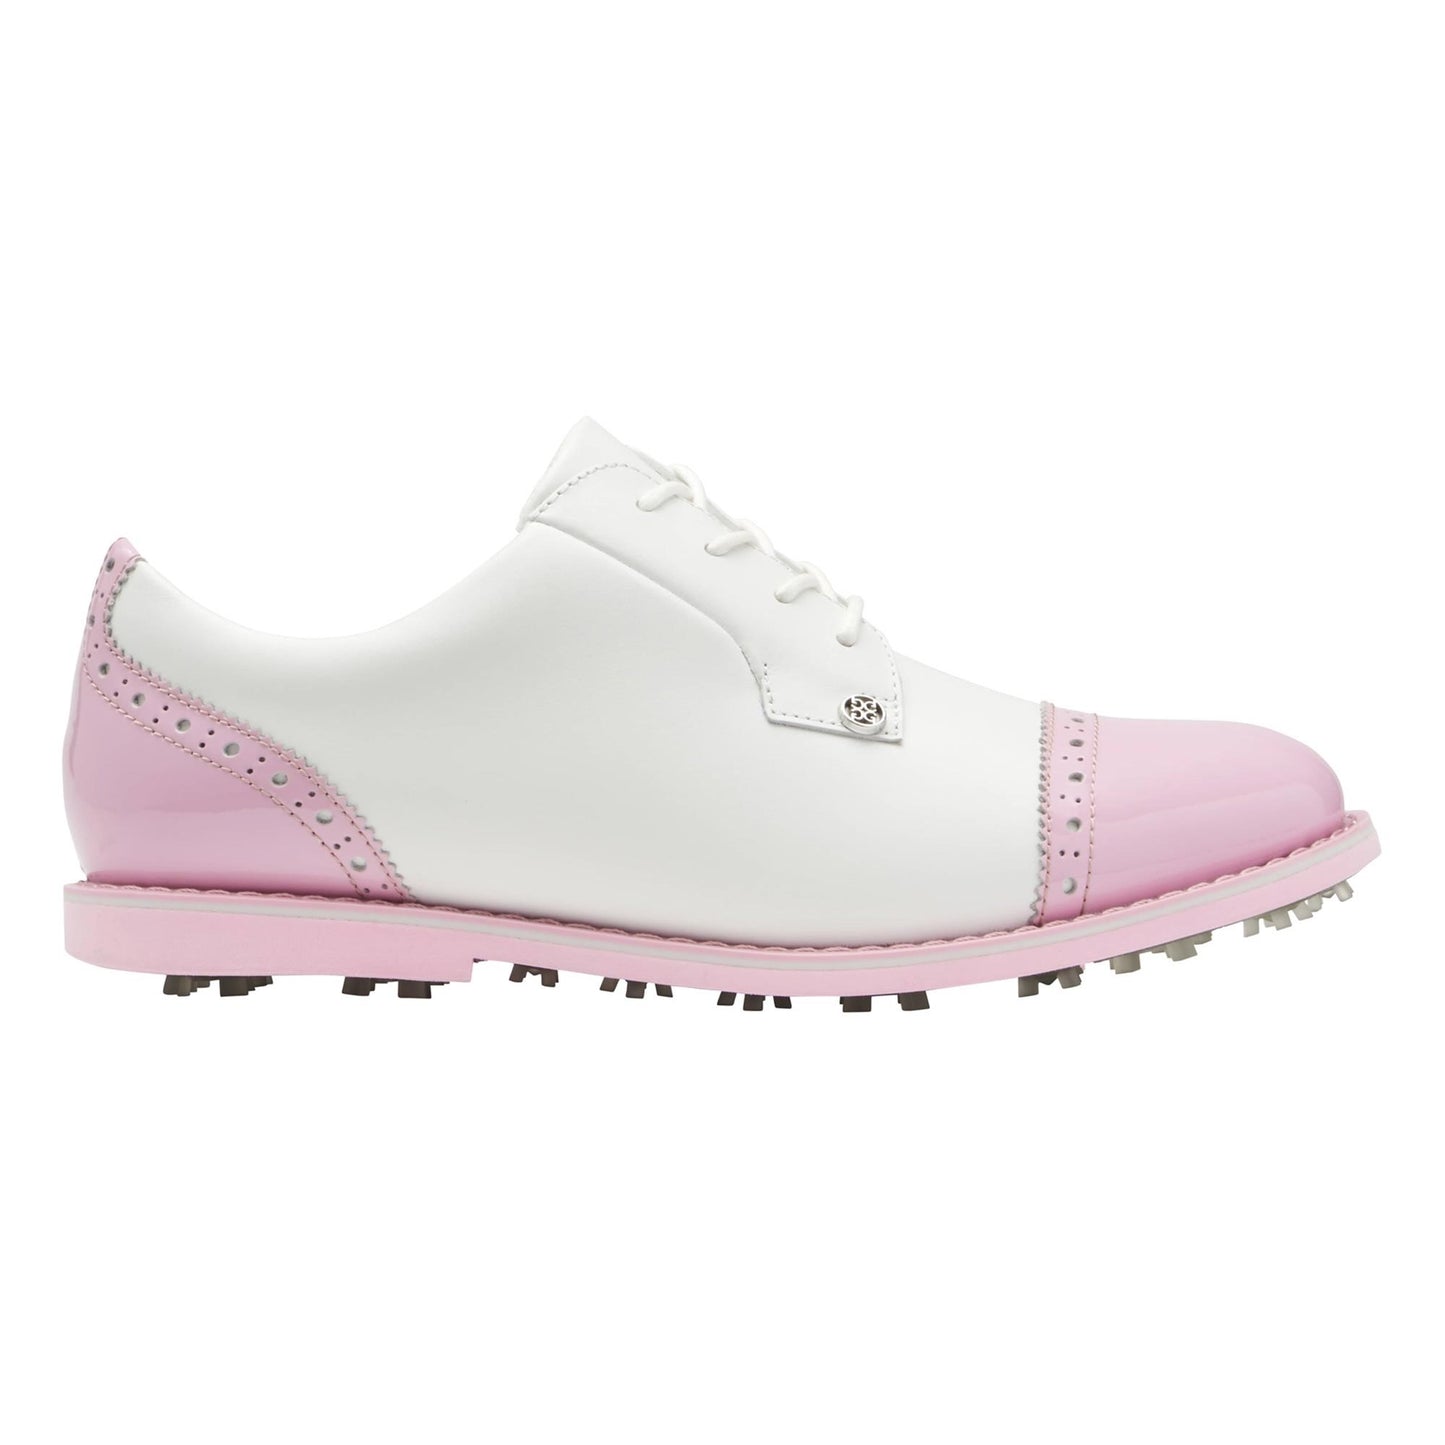 G/Fore Women's Cap Toe Gallivanter Golf Shoes - Sonw/Blush